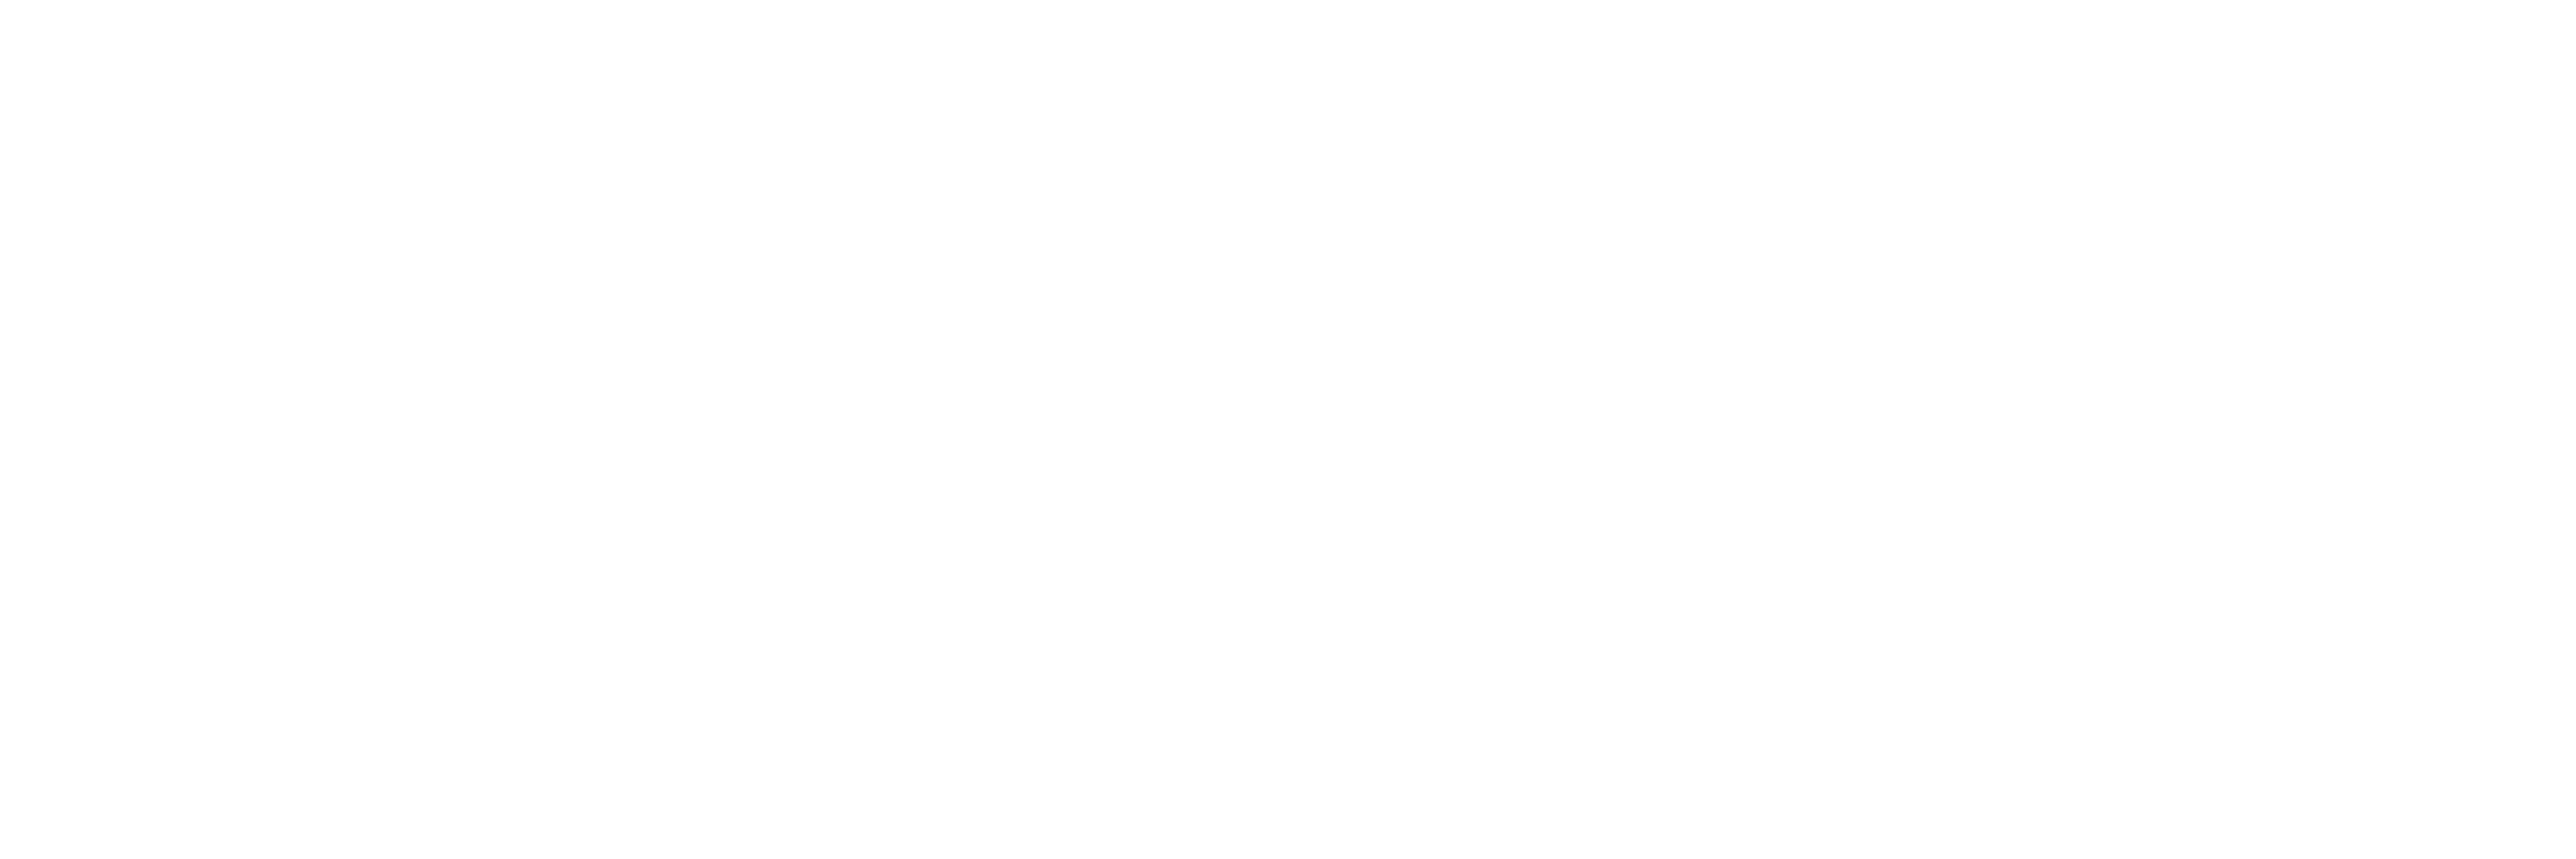 wanderlust-white